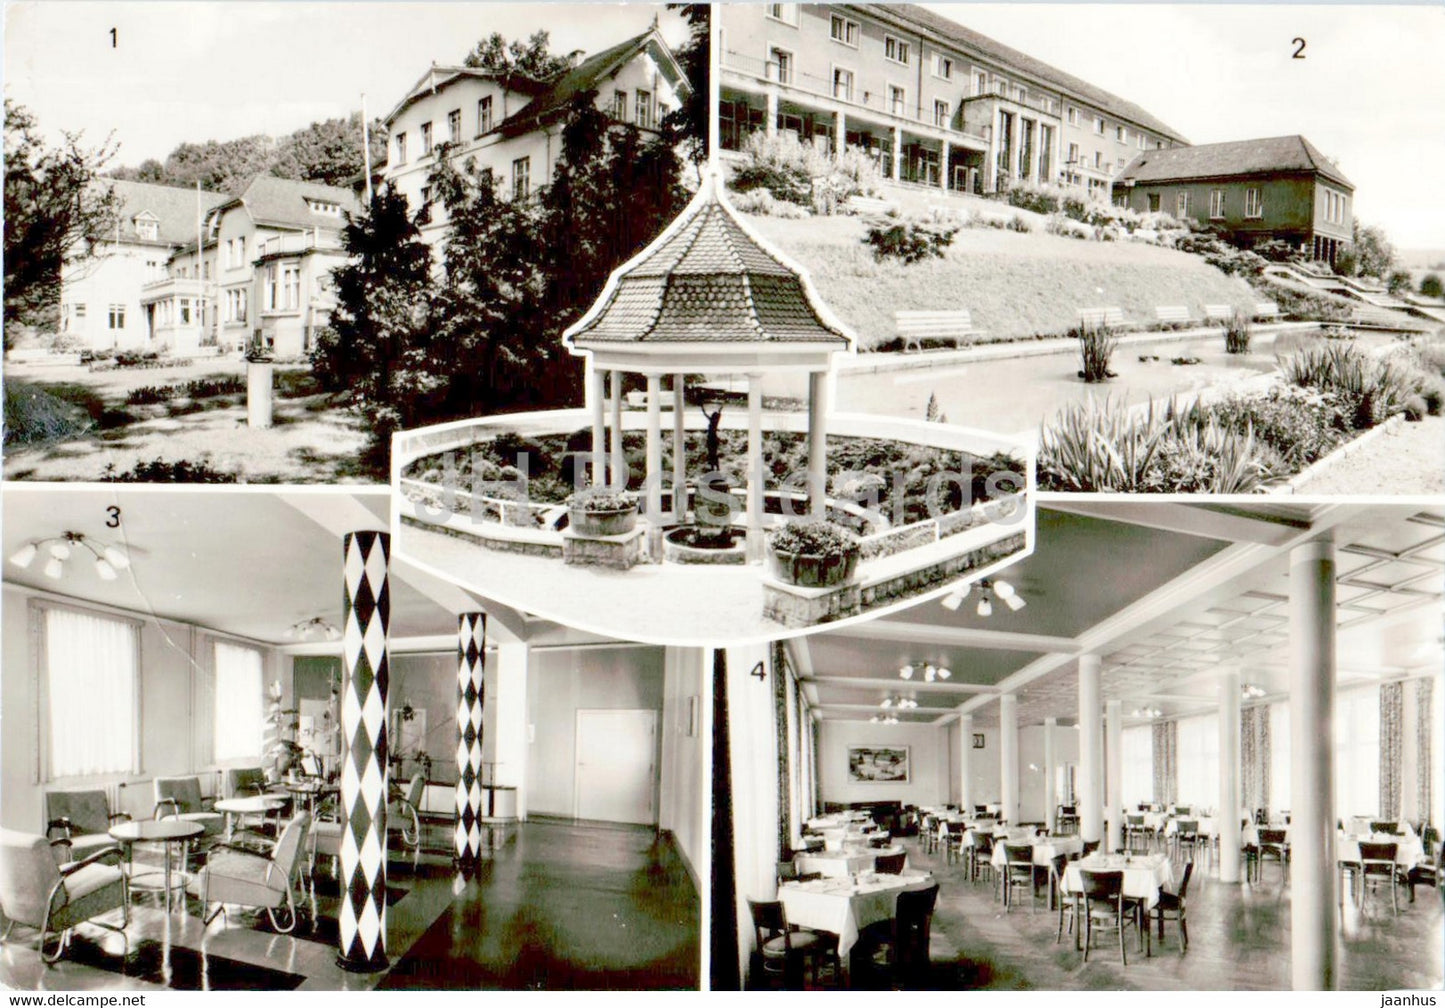 Bad Berka - Sanatorium - Vorhalle zum Arzt - Speisesaal - Germany DDR - unused - JH Postcards